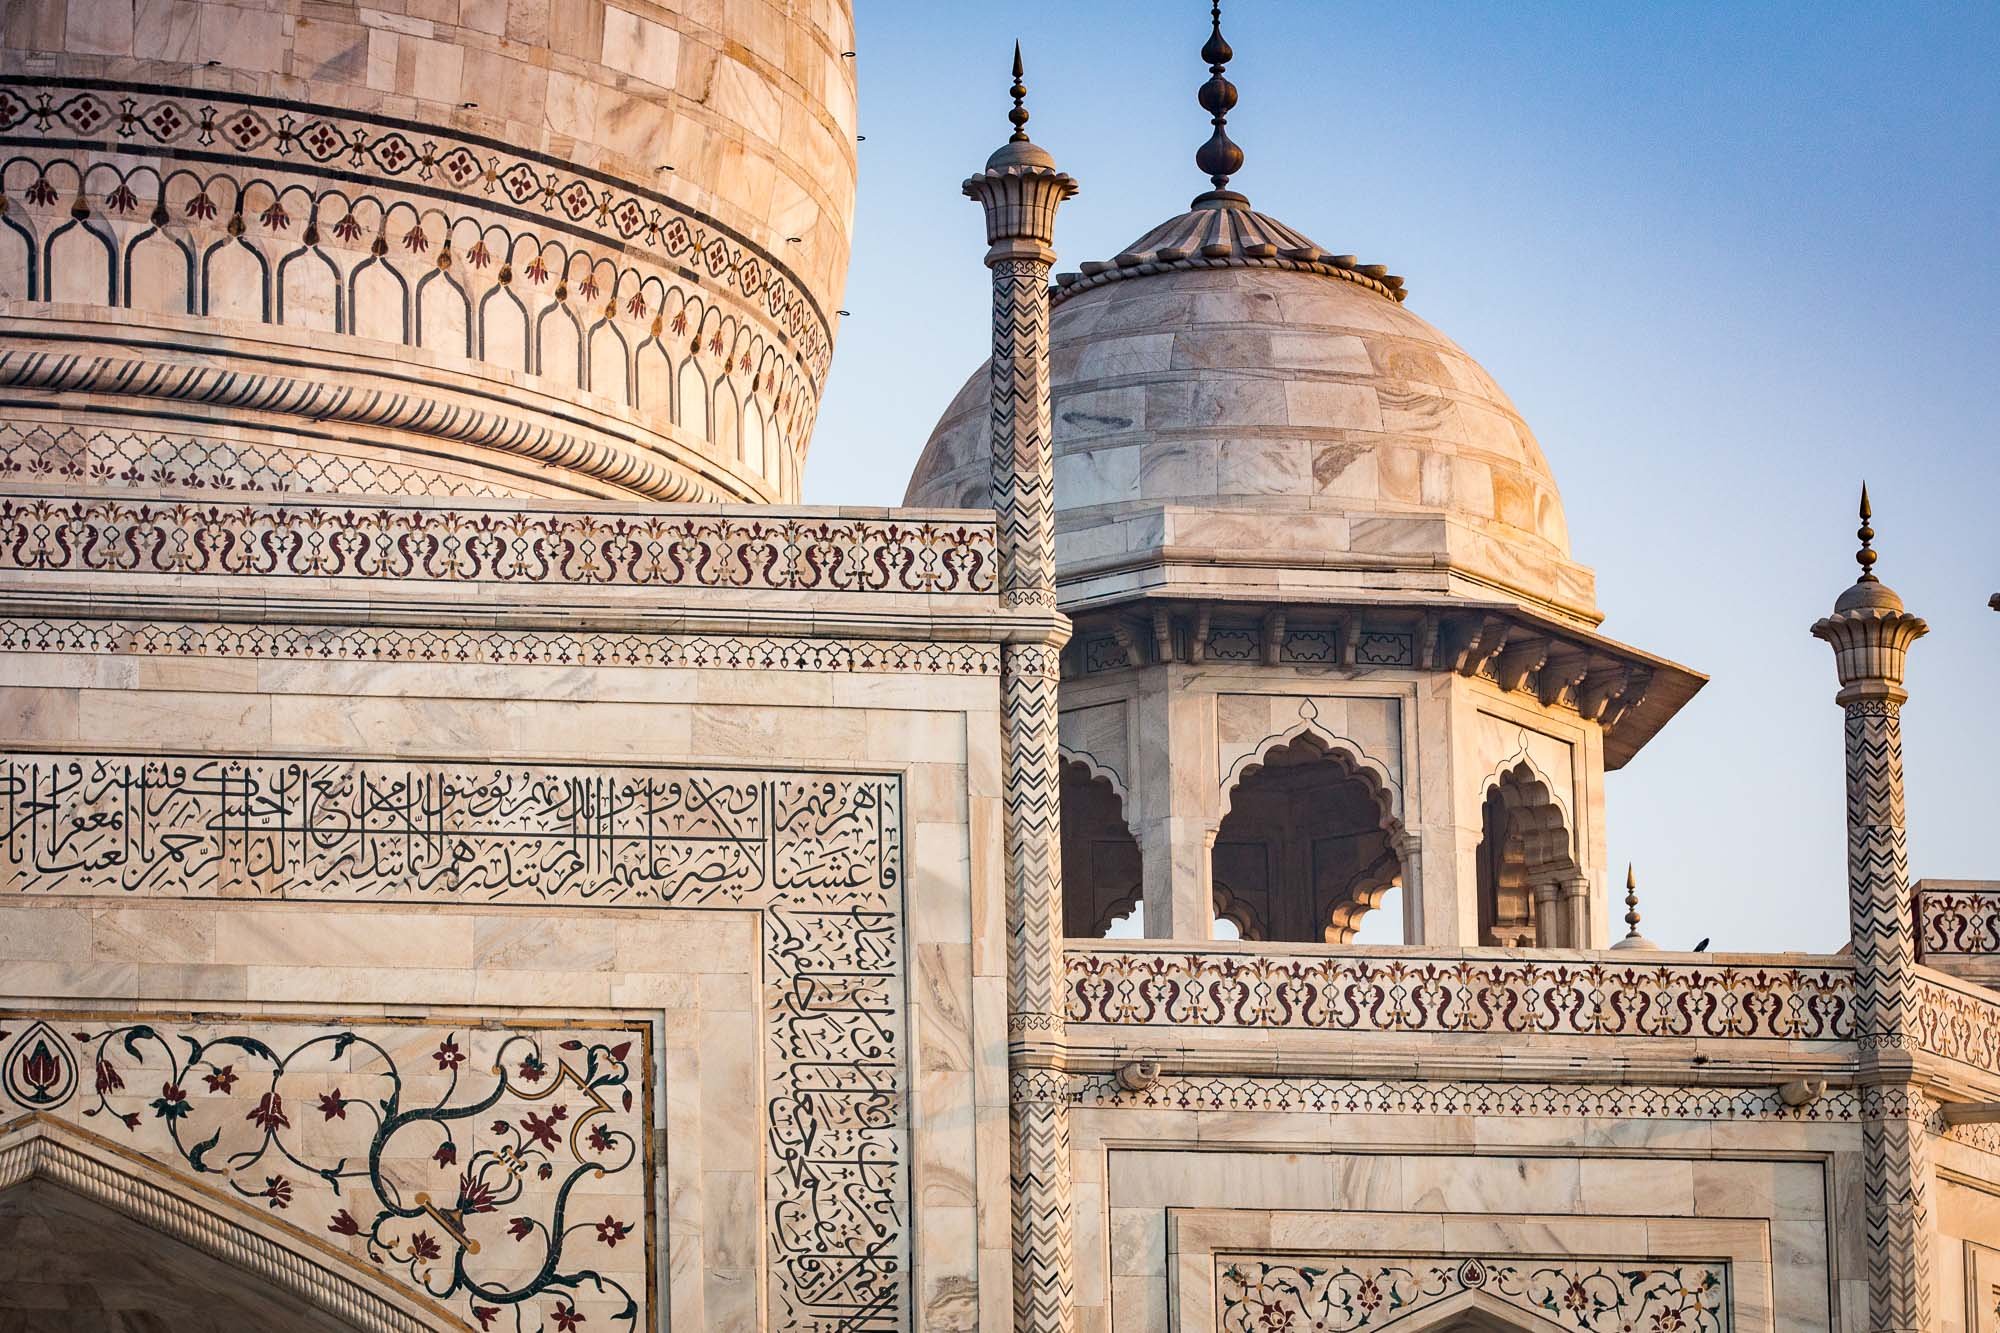 A view of the ornamentation on the Taj Mahal